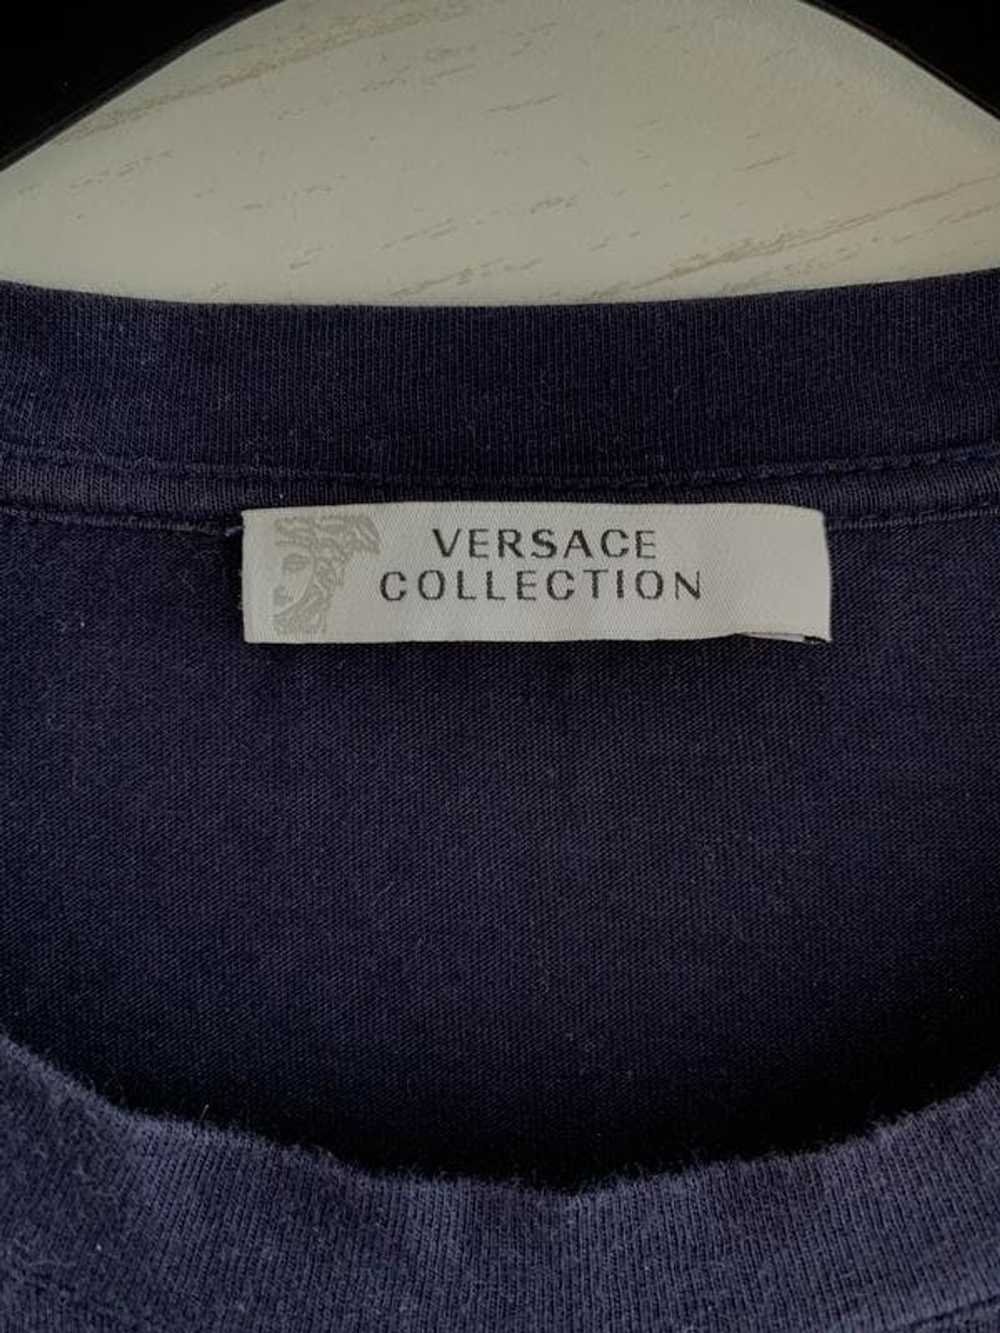 Versace Versace longsleeve t shirt - image 3